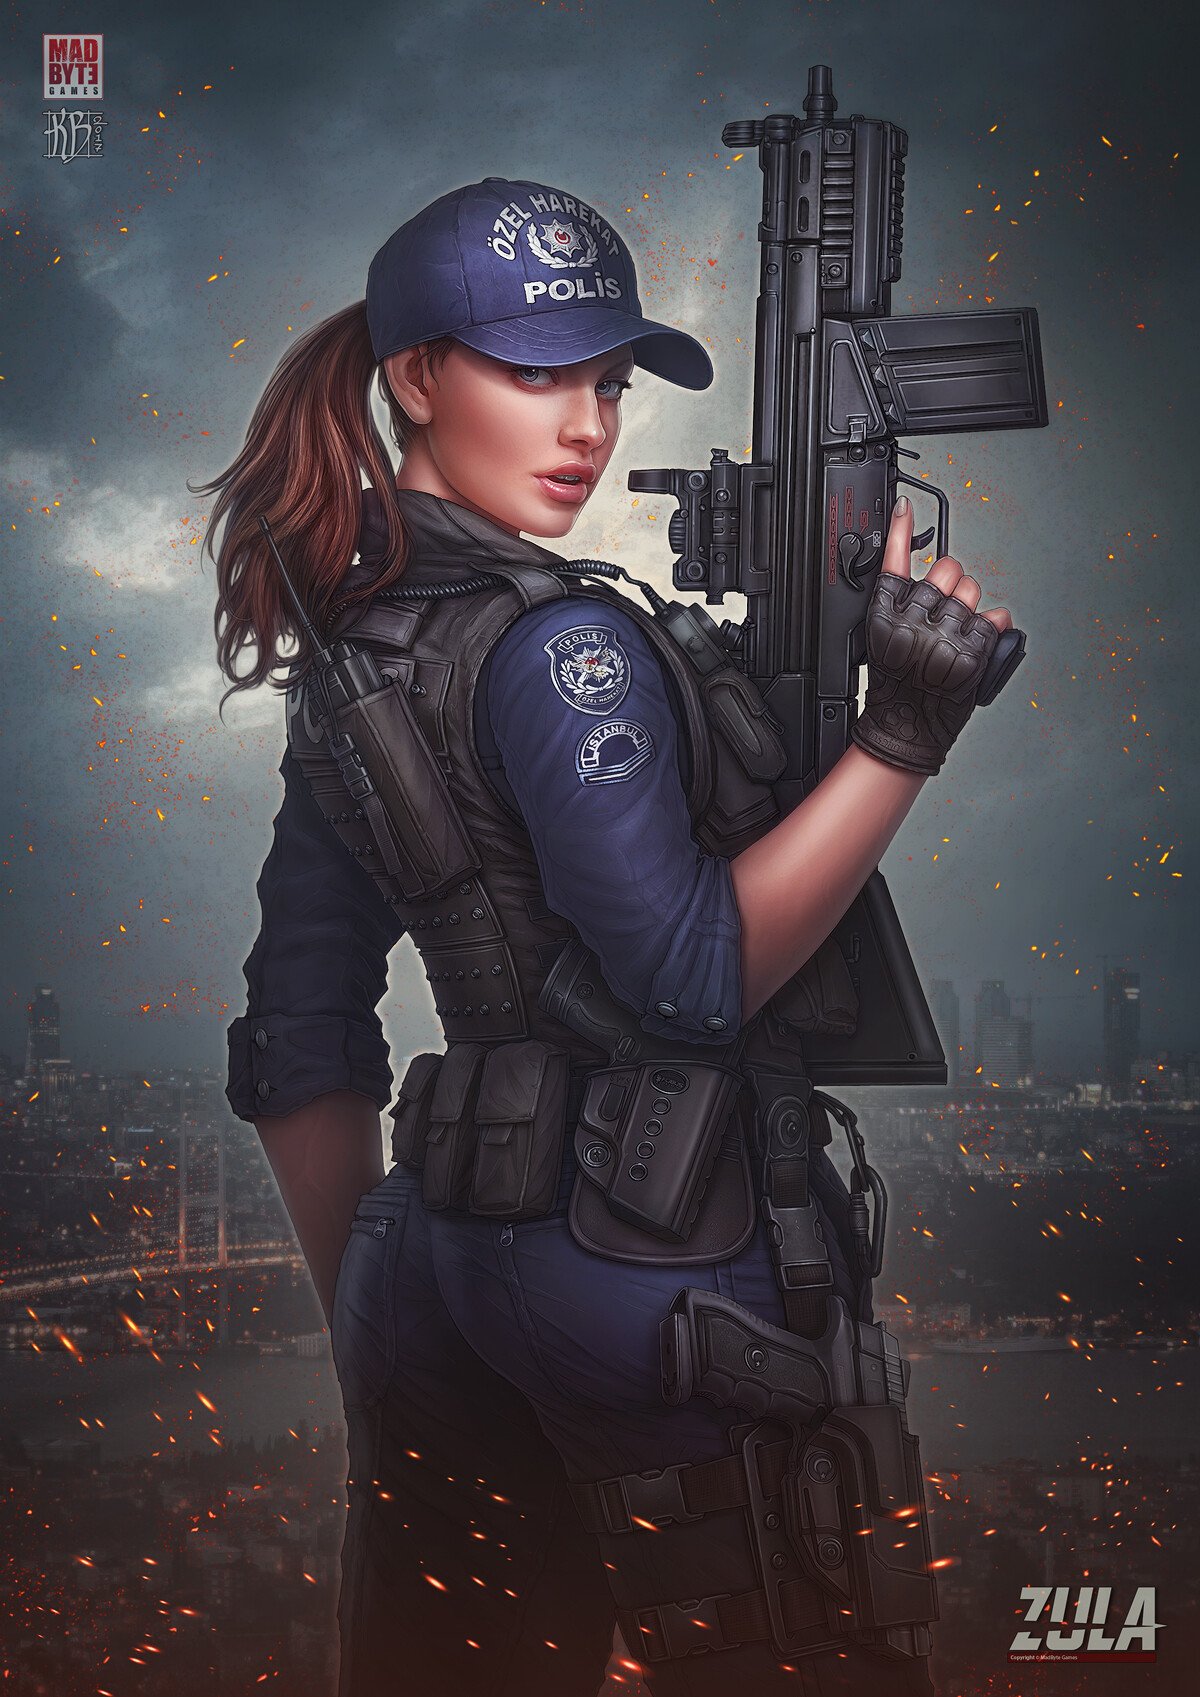 Wallpaper, Kerem Beyit, artwork, police women, girls with guns, machine gun, standing, hat, uniform, looking at viewer 1200x1697